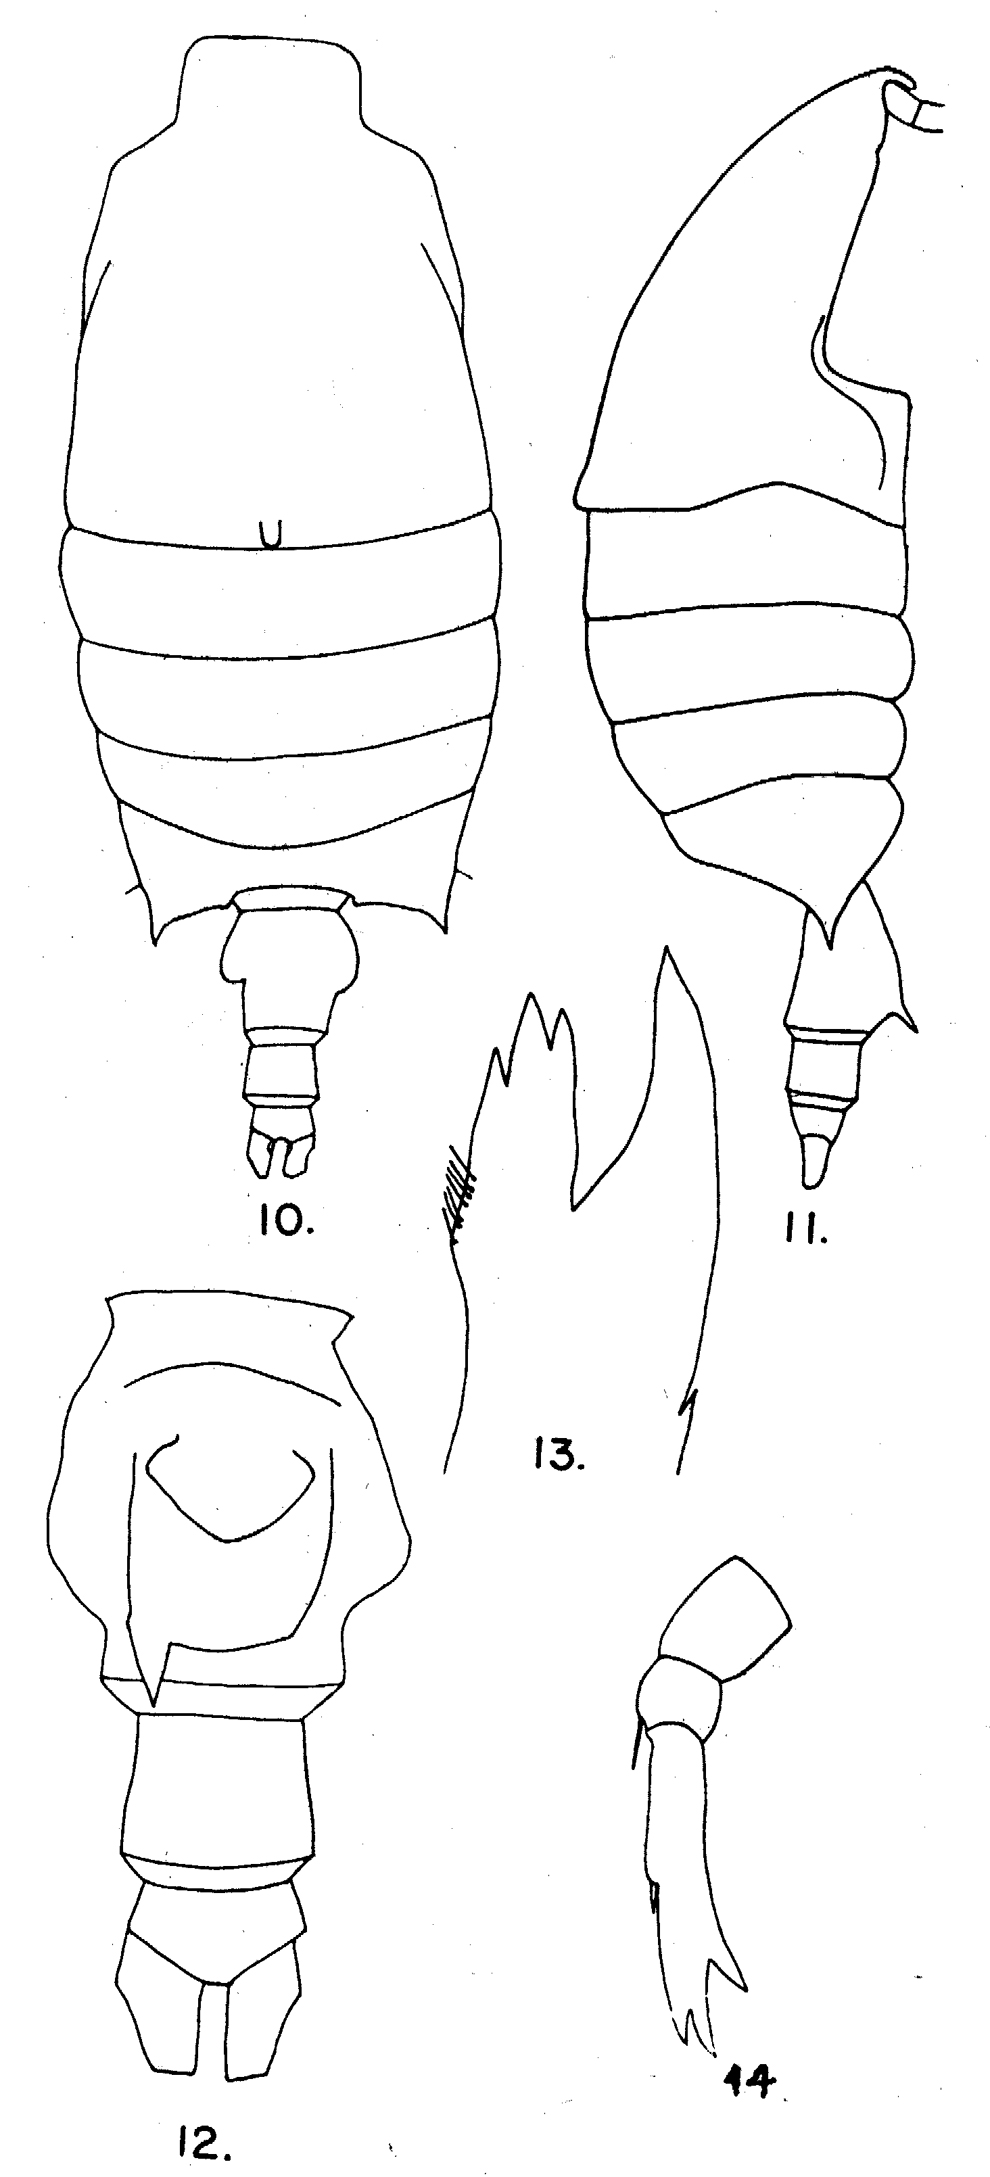 Espce Candacia curta - Planche 9 de figures morphologiques